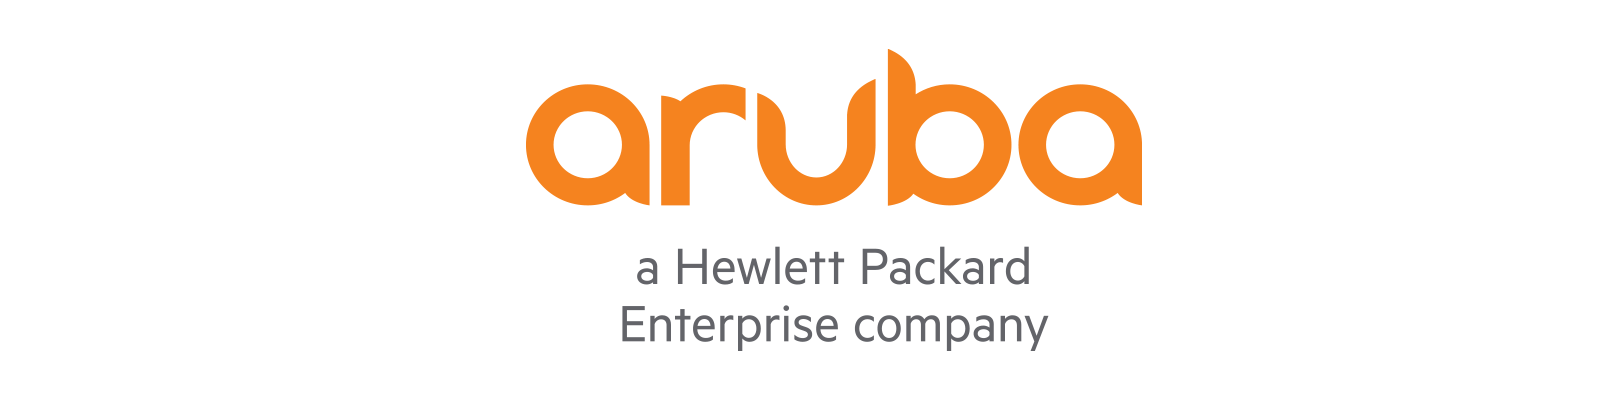 New HP Enterprise Logo - Aruba | Enterprise Networking and Security Solutions